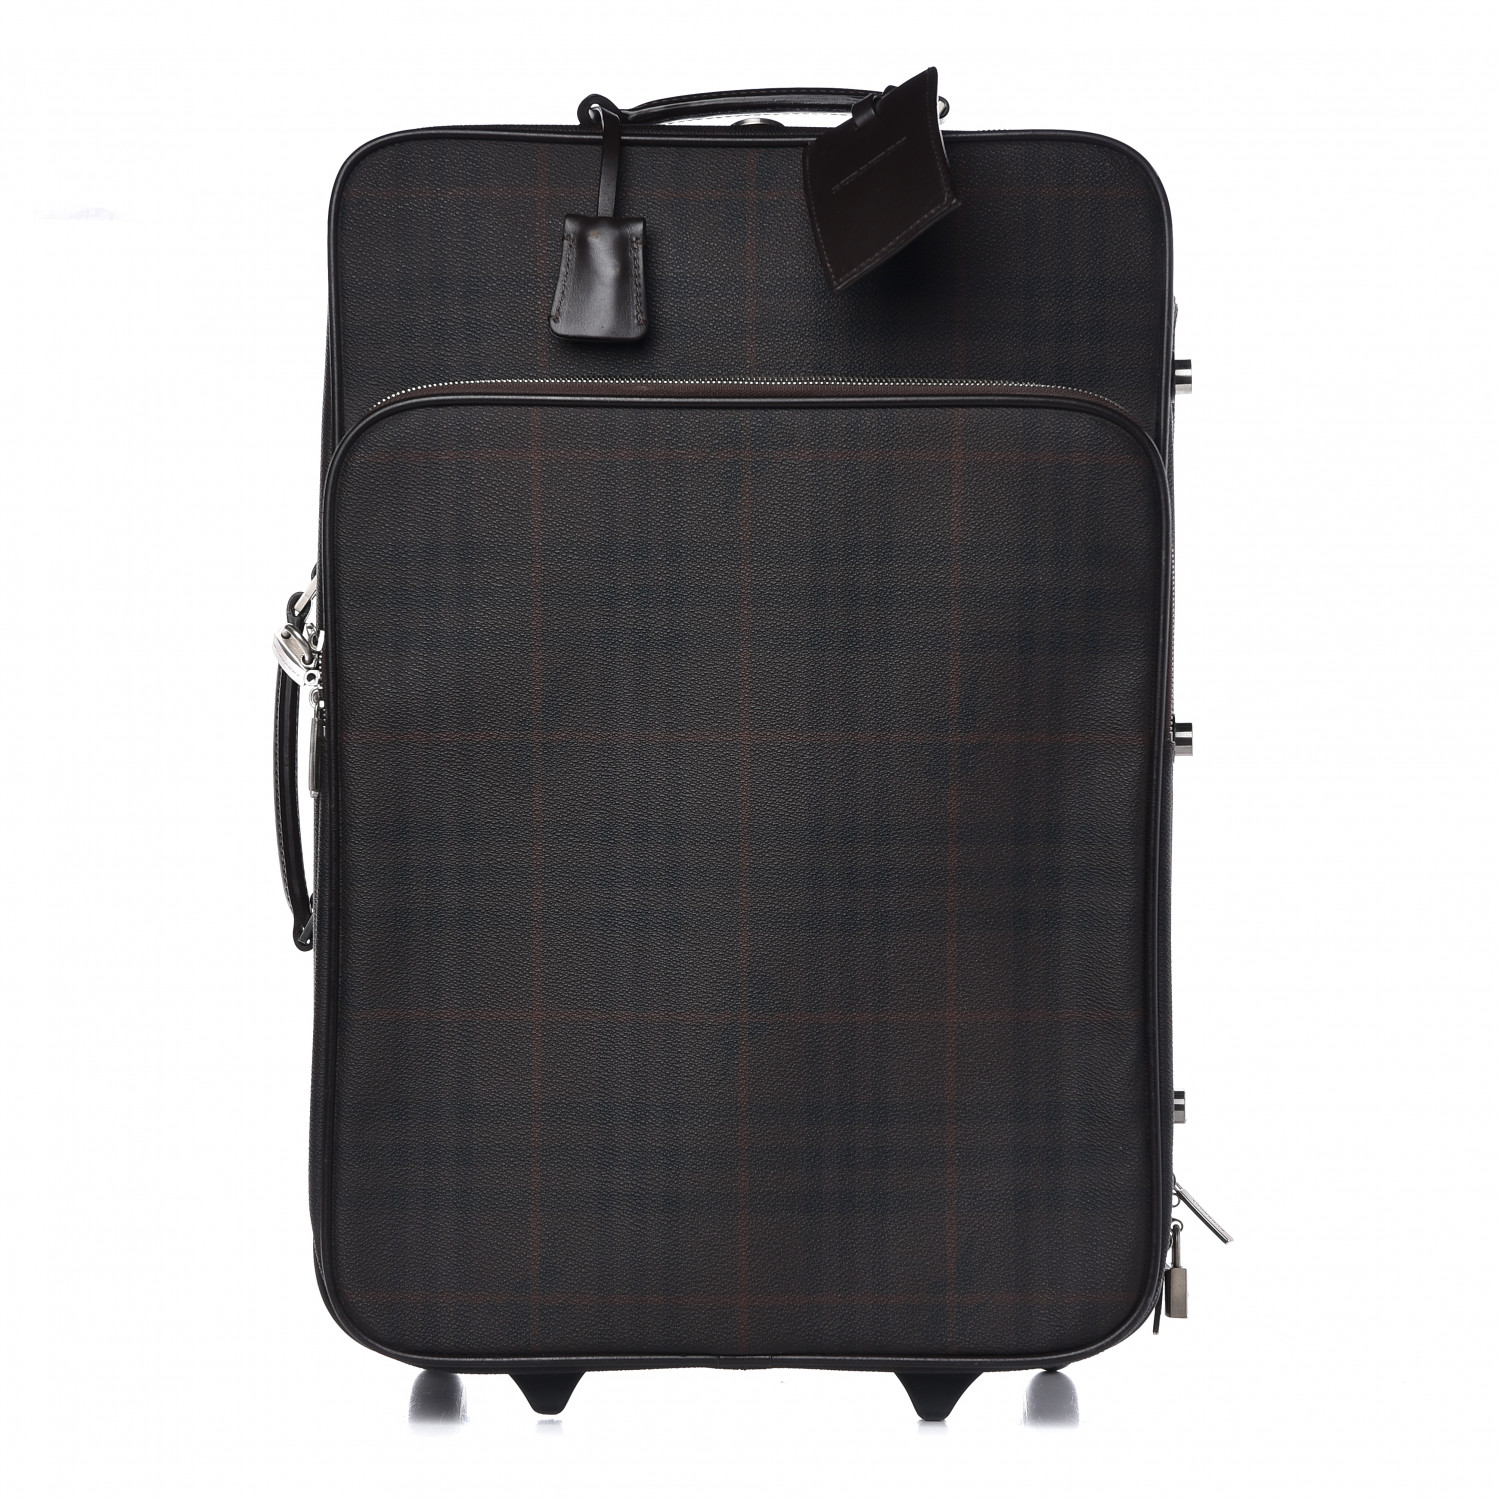 burberry suitcase